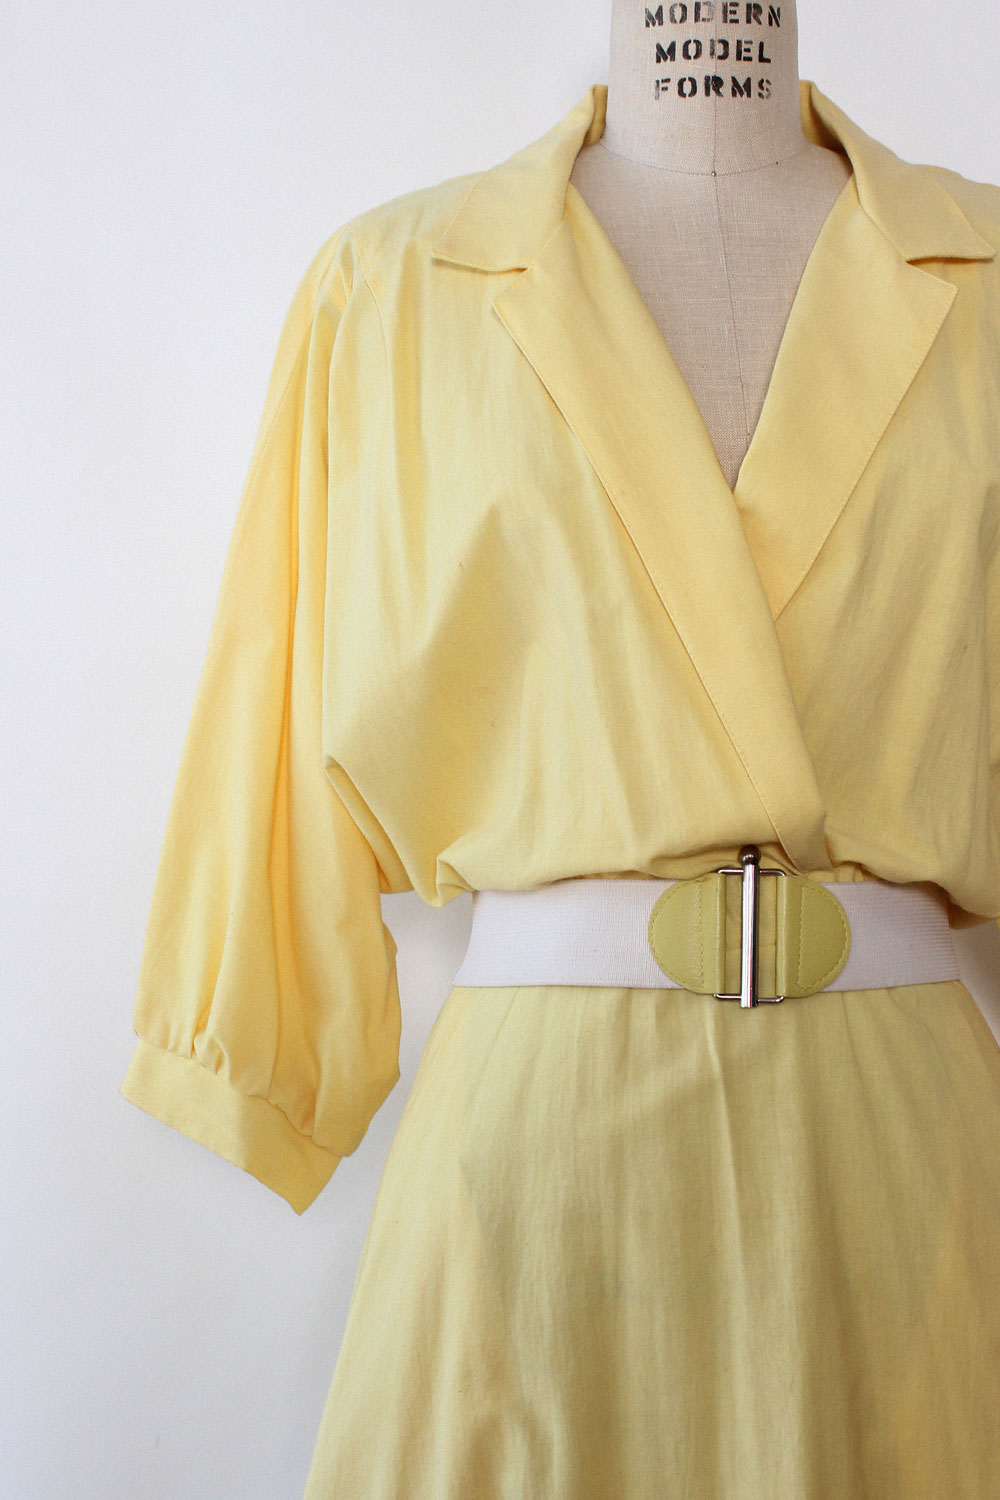 Lemon Yellow Flare Dress L/XL